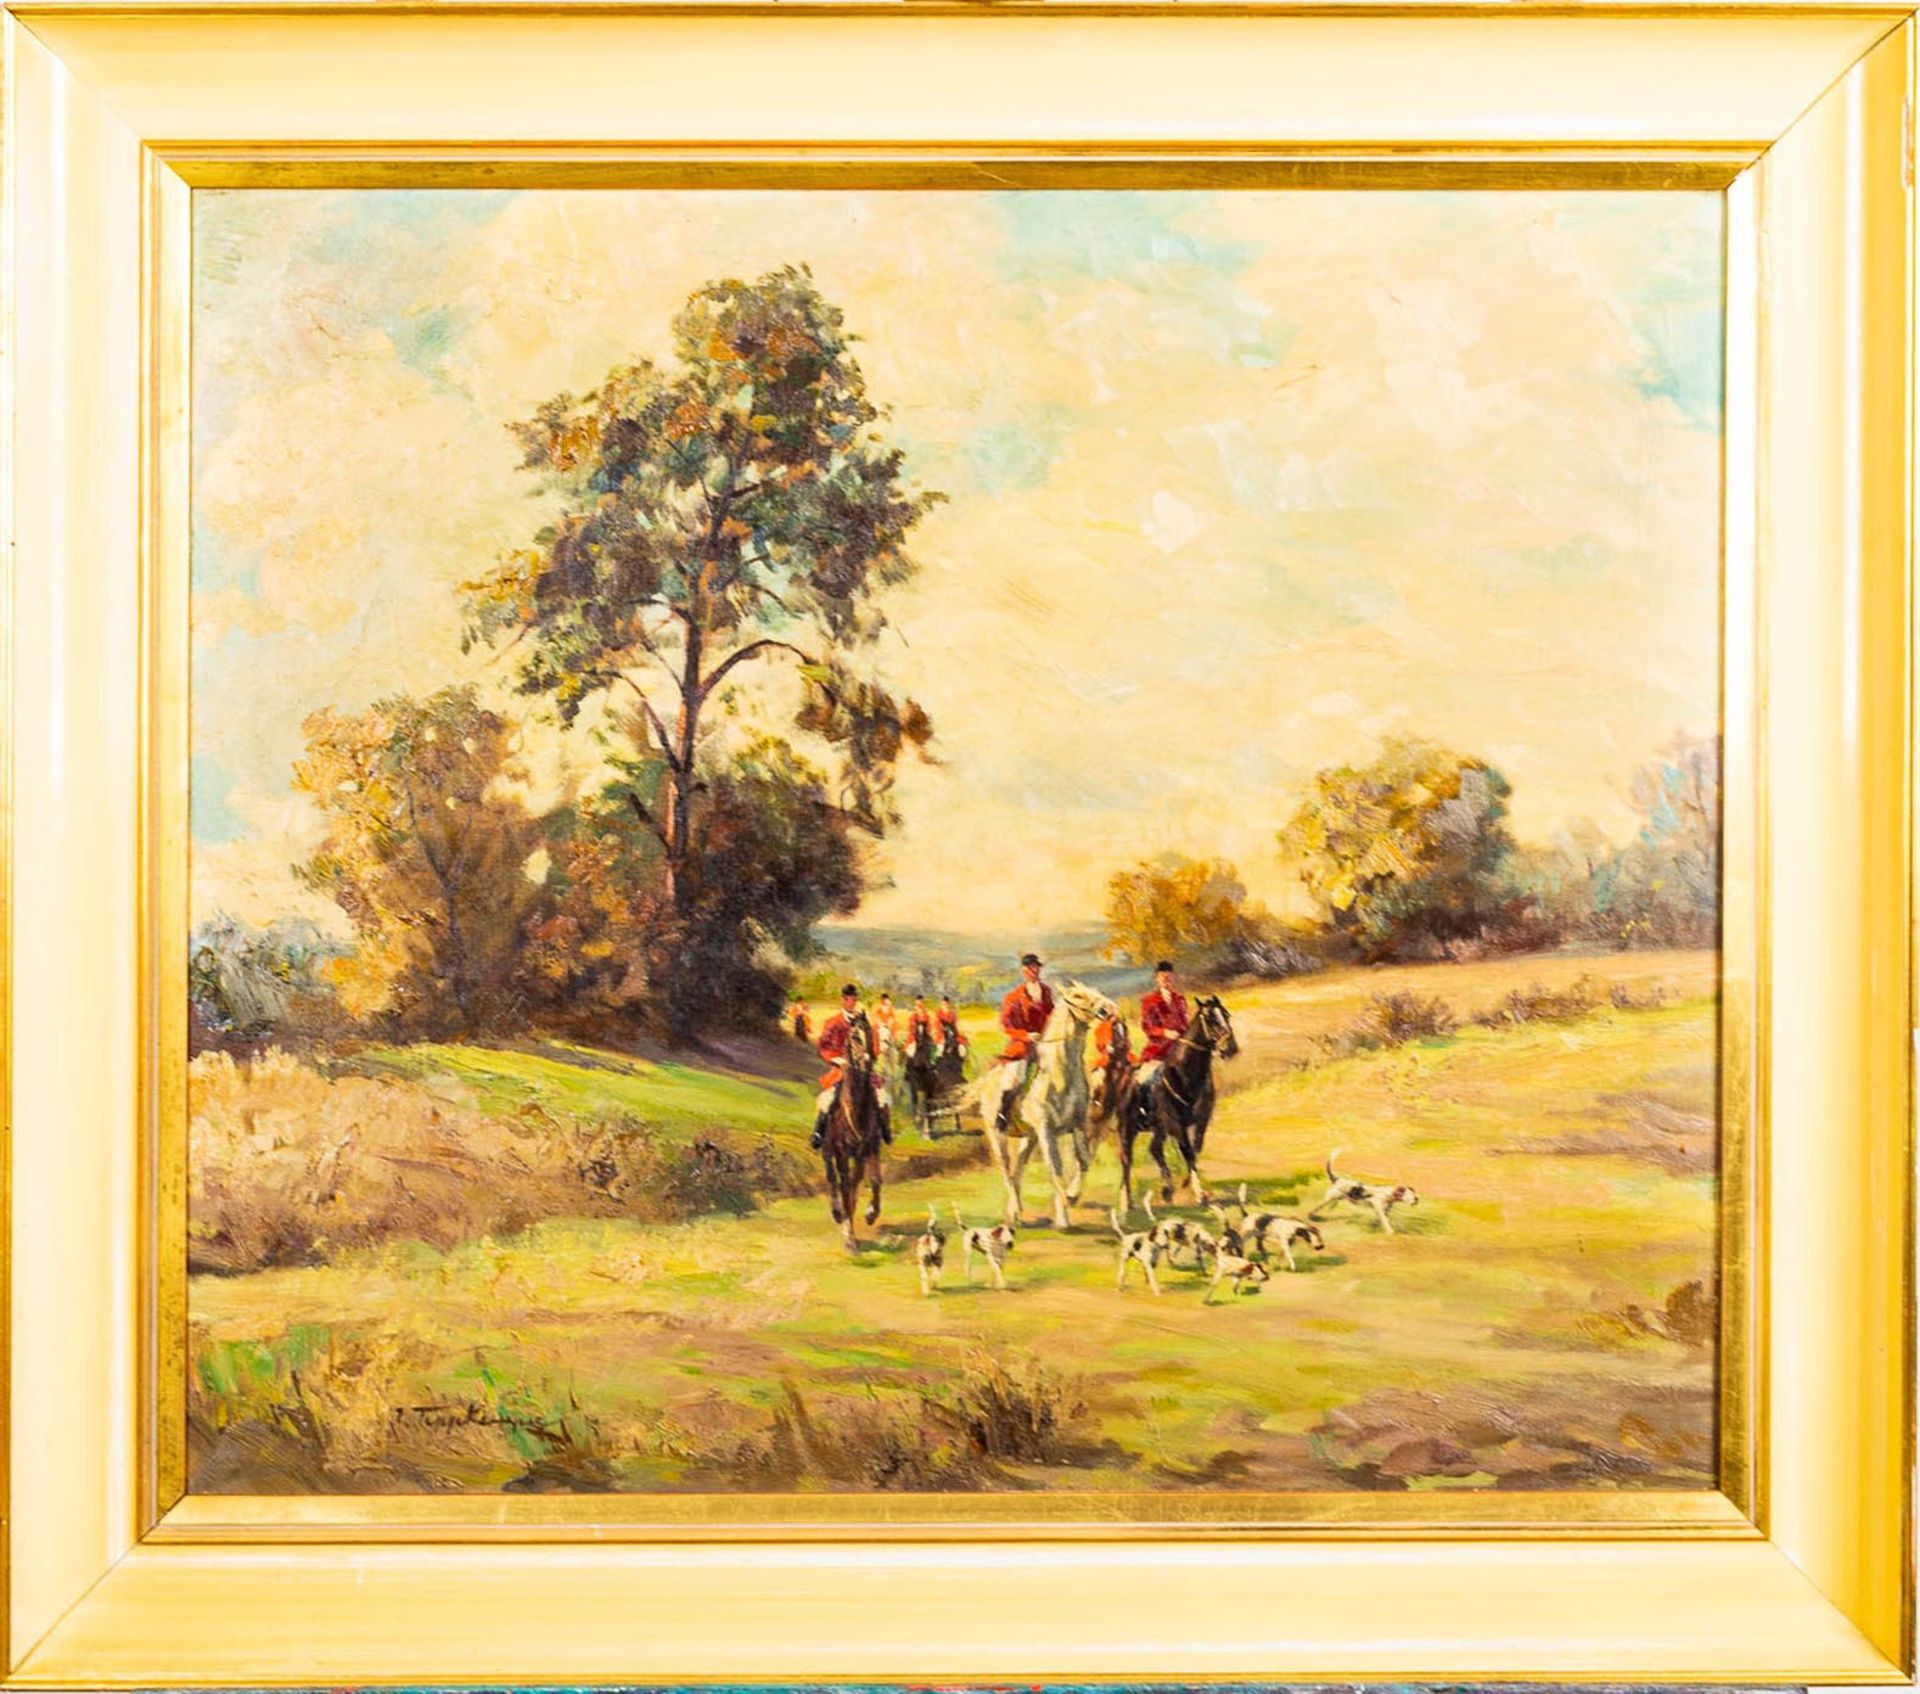 "Parforcejagd", Gemälde Öl auf Leinwand, ca. 60 x 70 cm, unten links sign.: "Ti